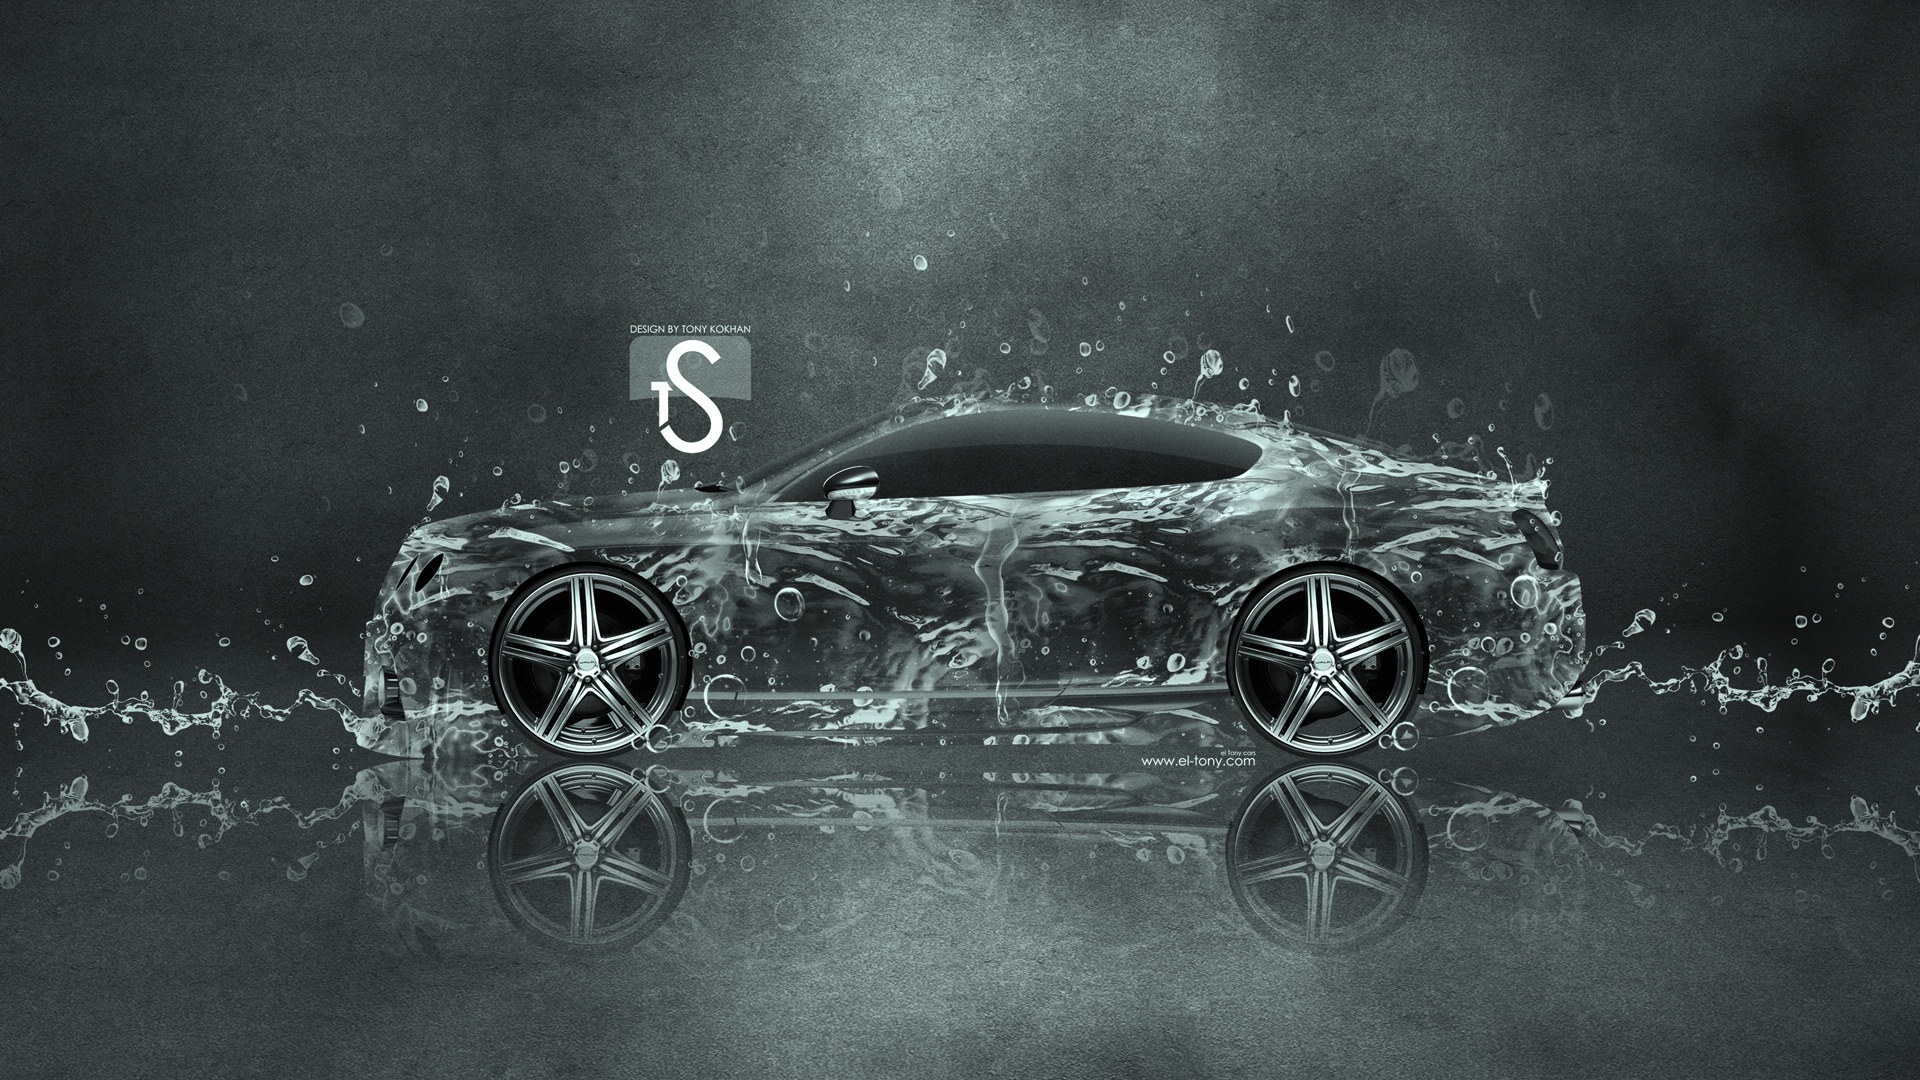 Water drops splash, beautiful car creative design wallpaper #2 - 1920x1080